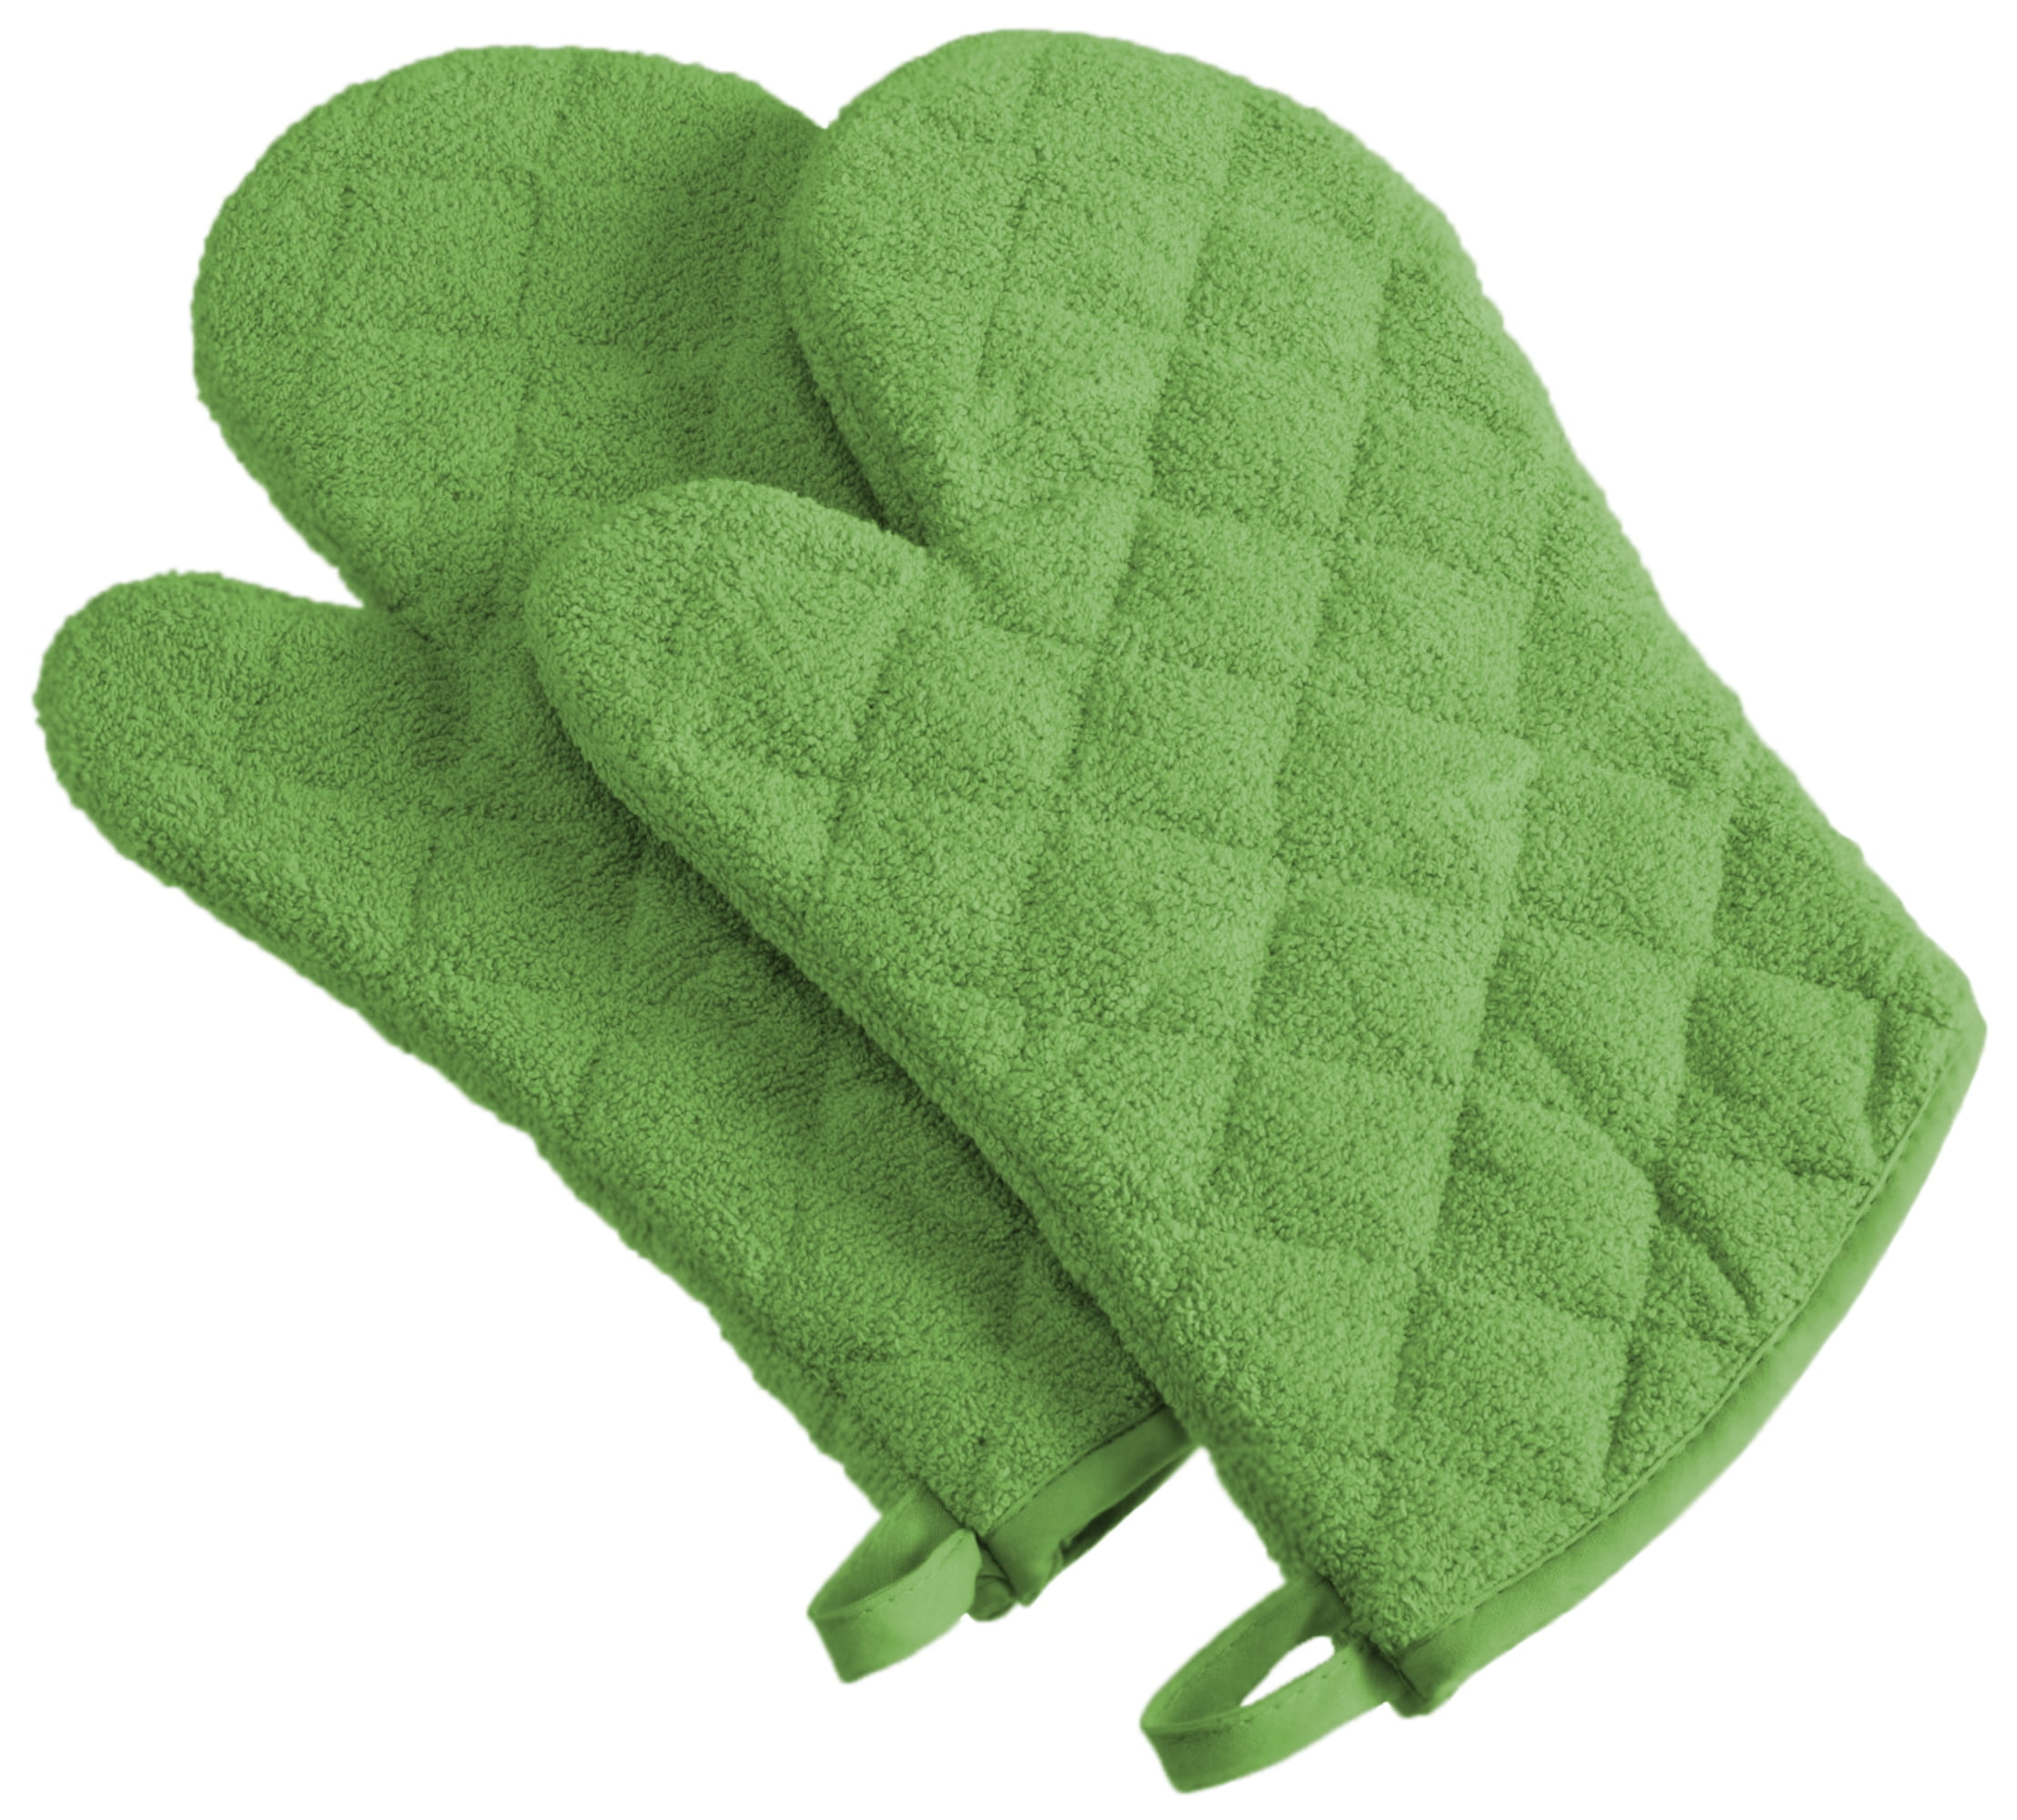 DII Green Apple Terry Oven Mitt (Set of 2), 7x13, 100% Cotton 